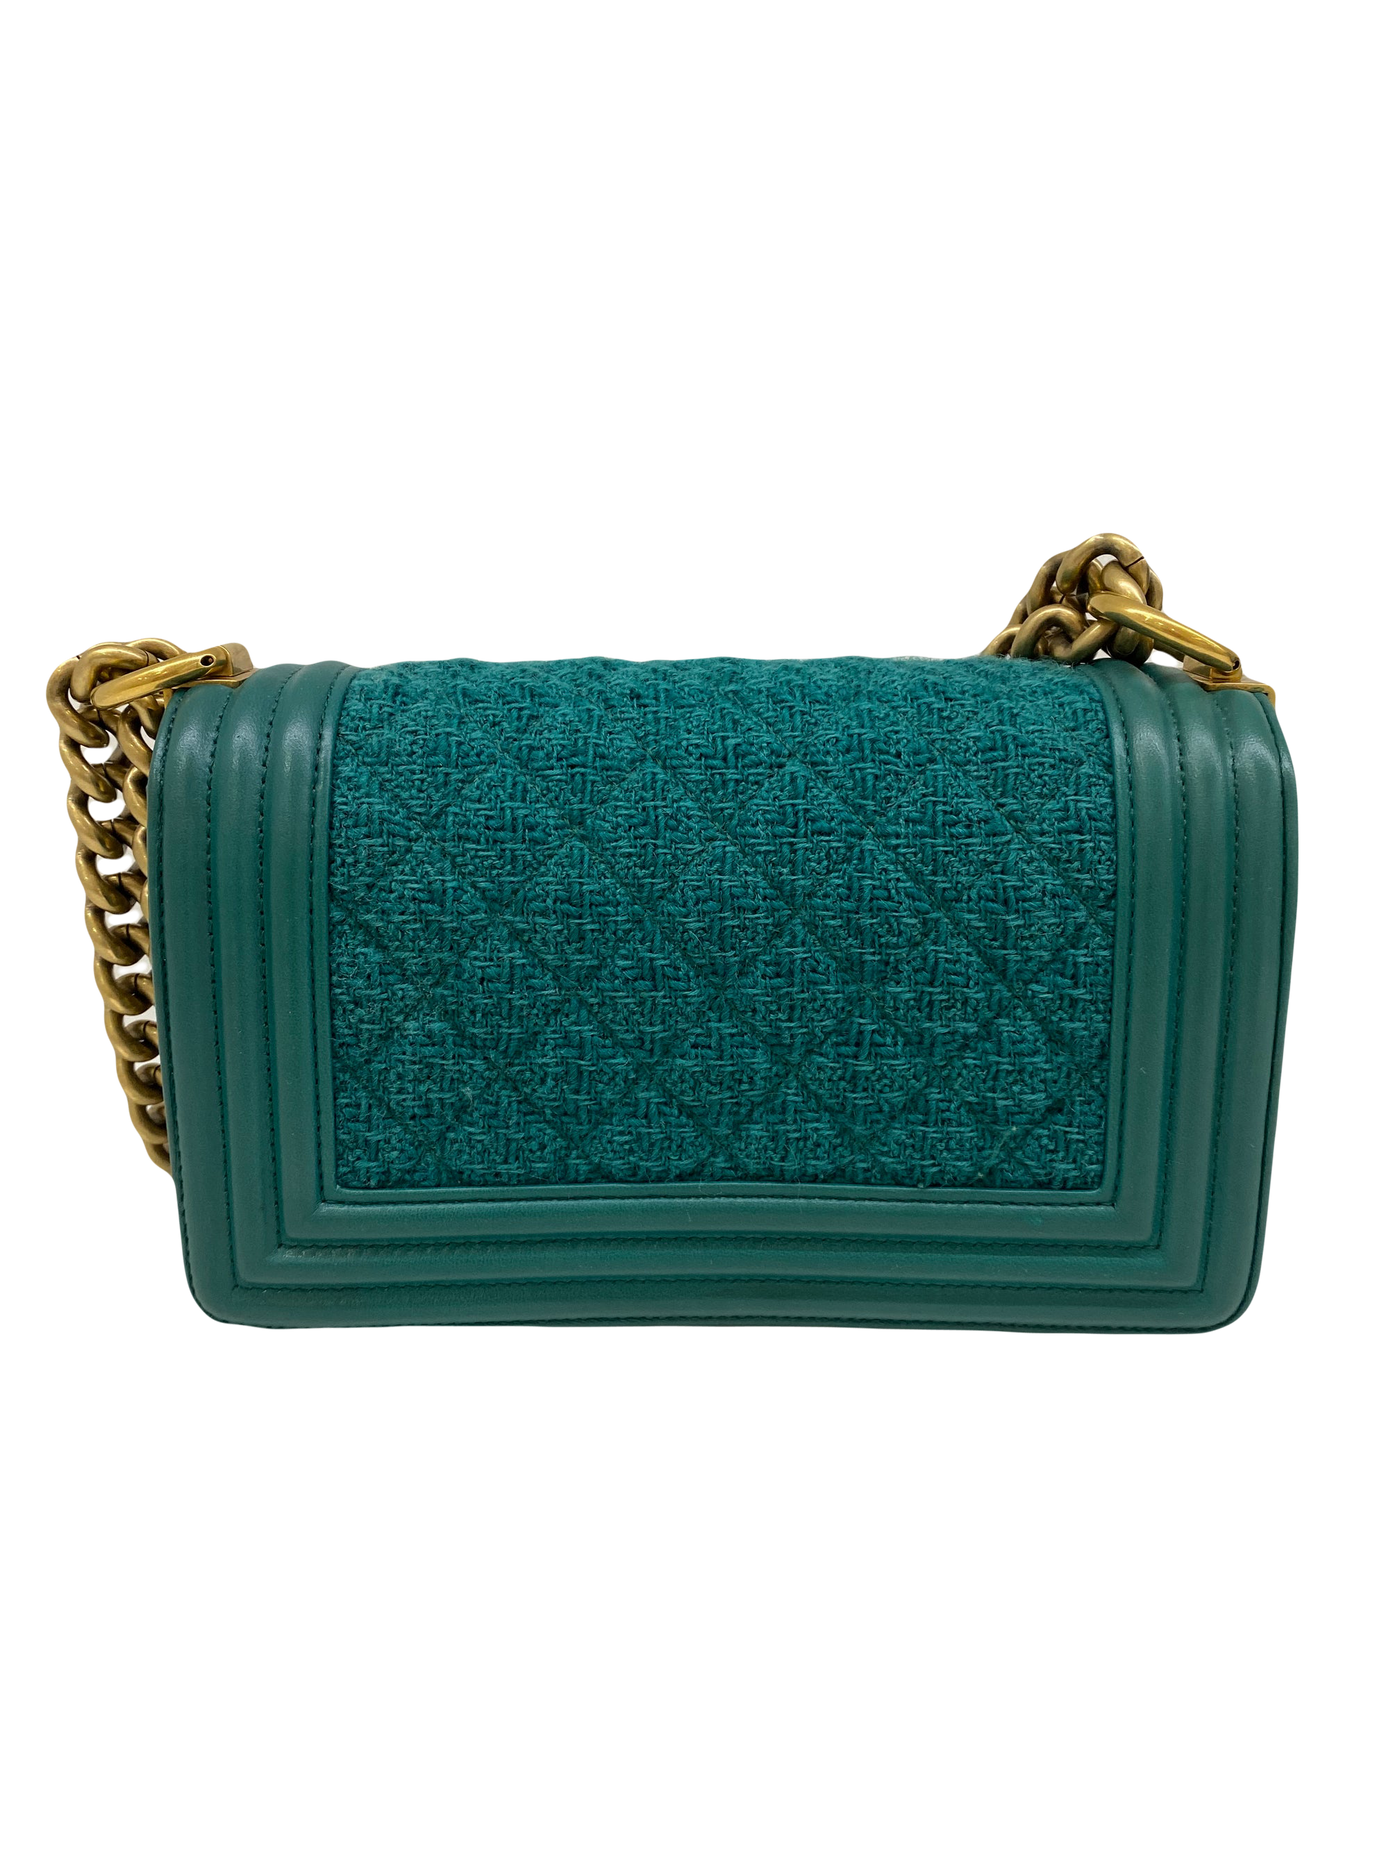 Chanel Small Boy Bag - Emerald Tweed SOLD